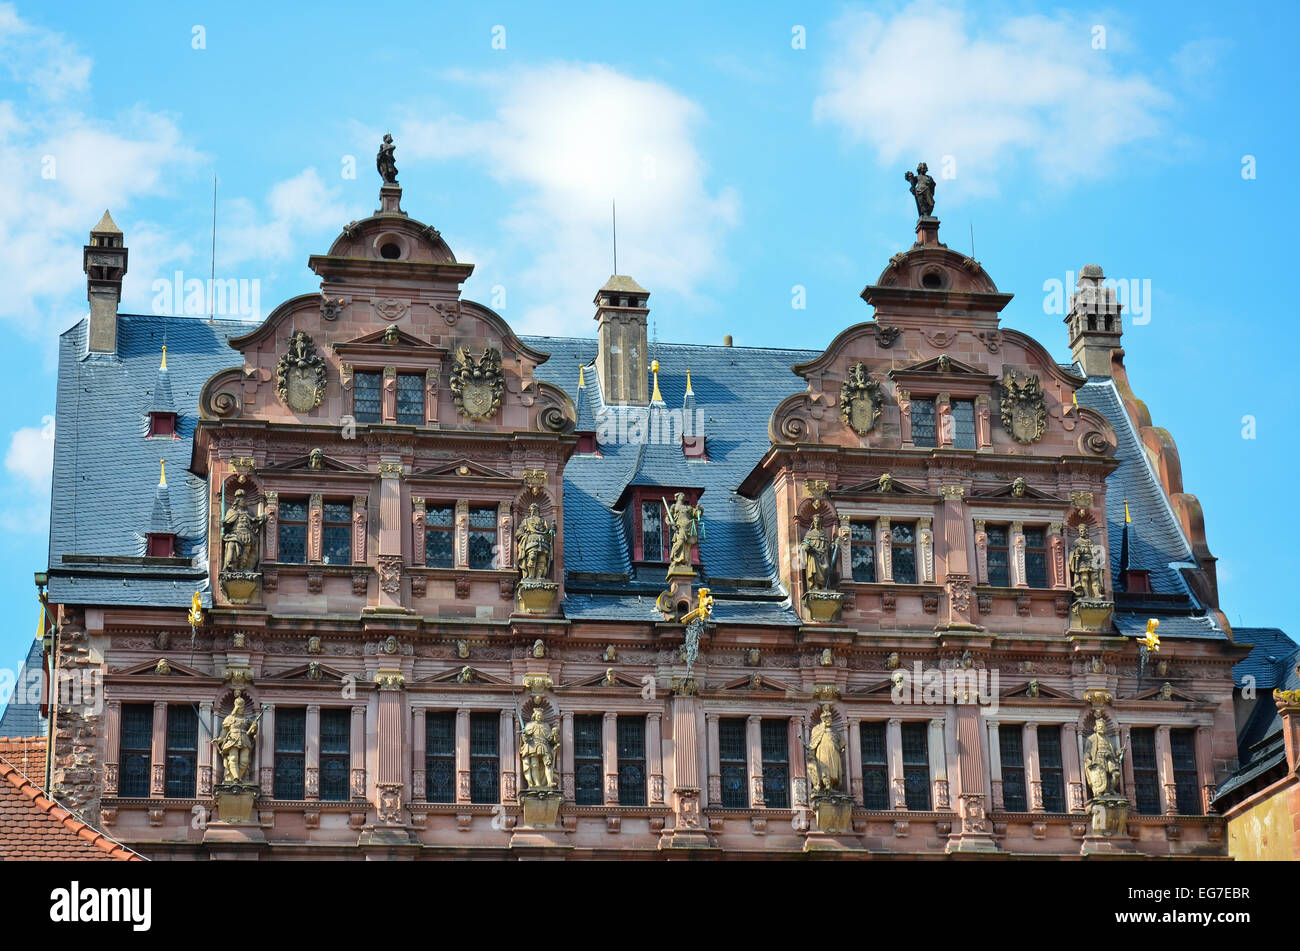 View of the splendid baroque facade of the castle Stock Photo